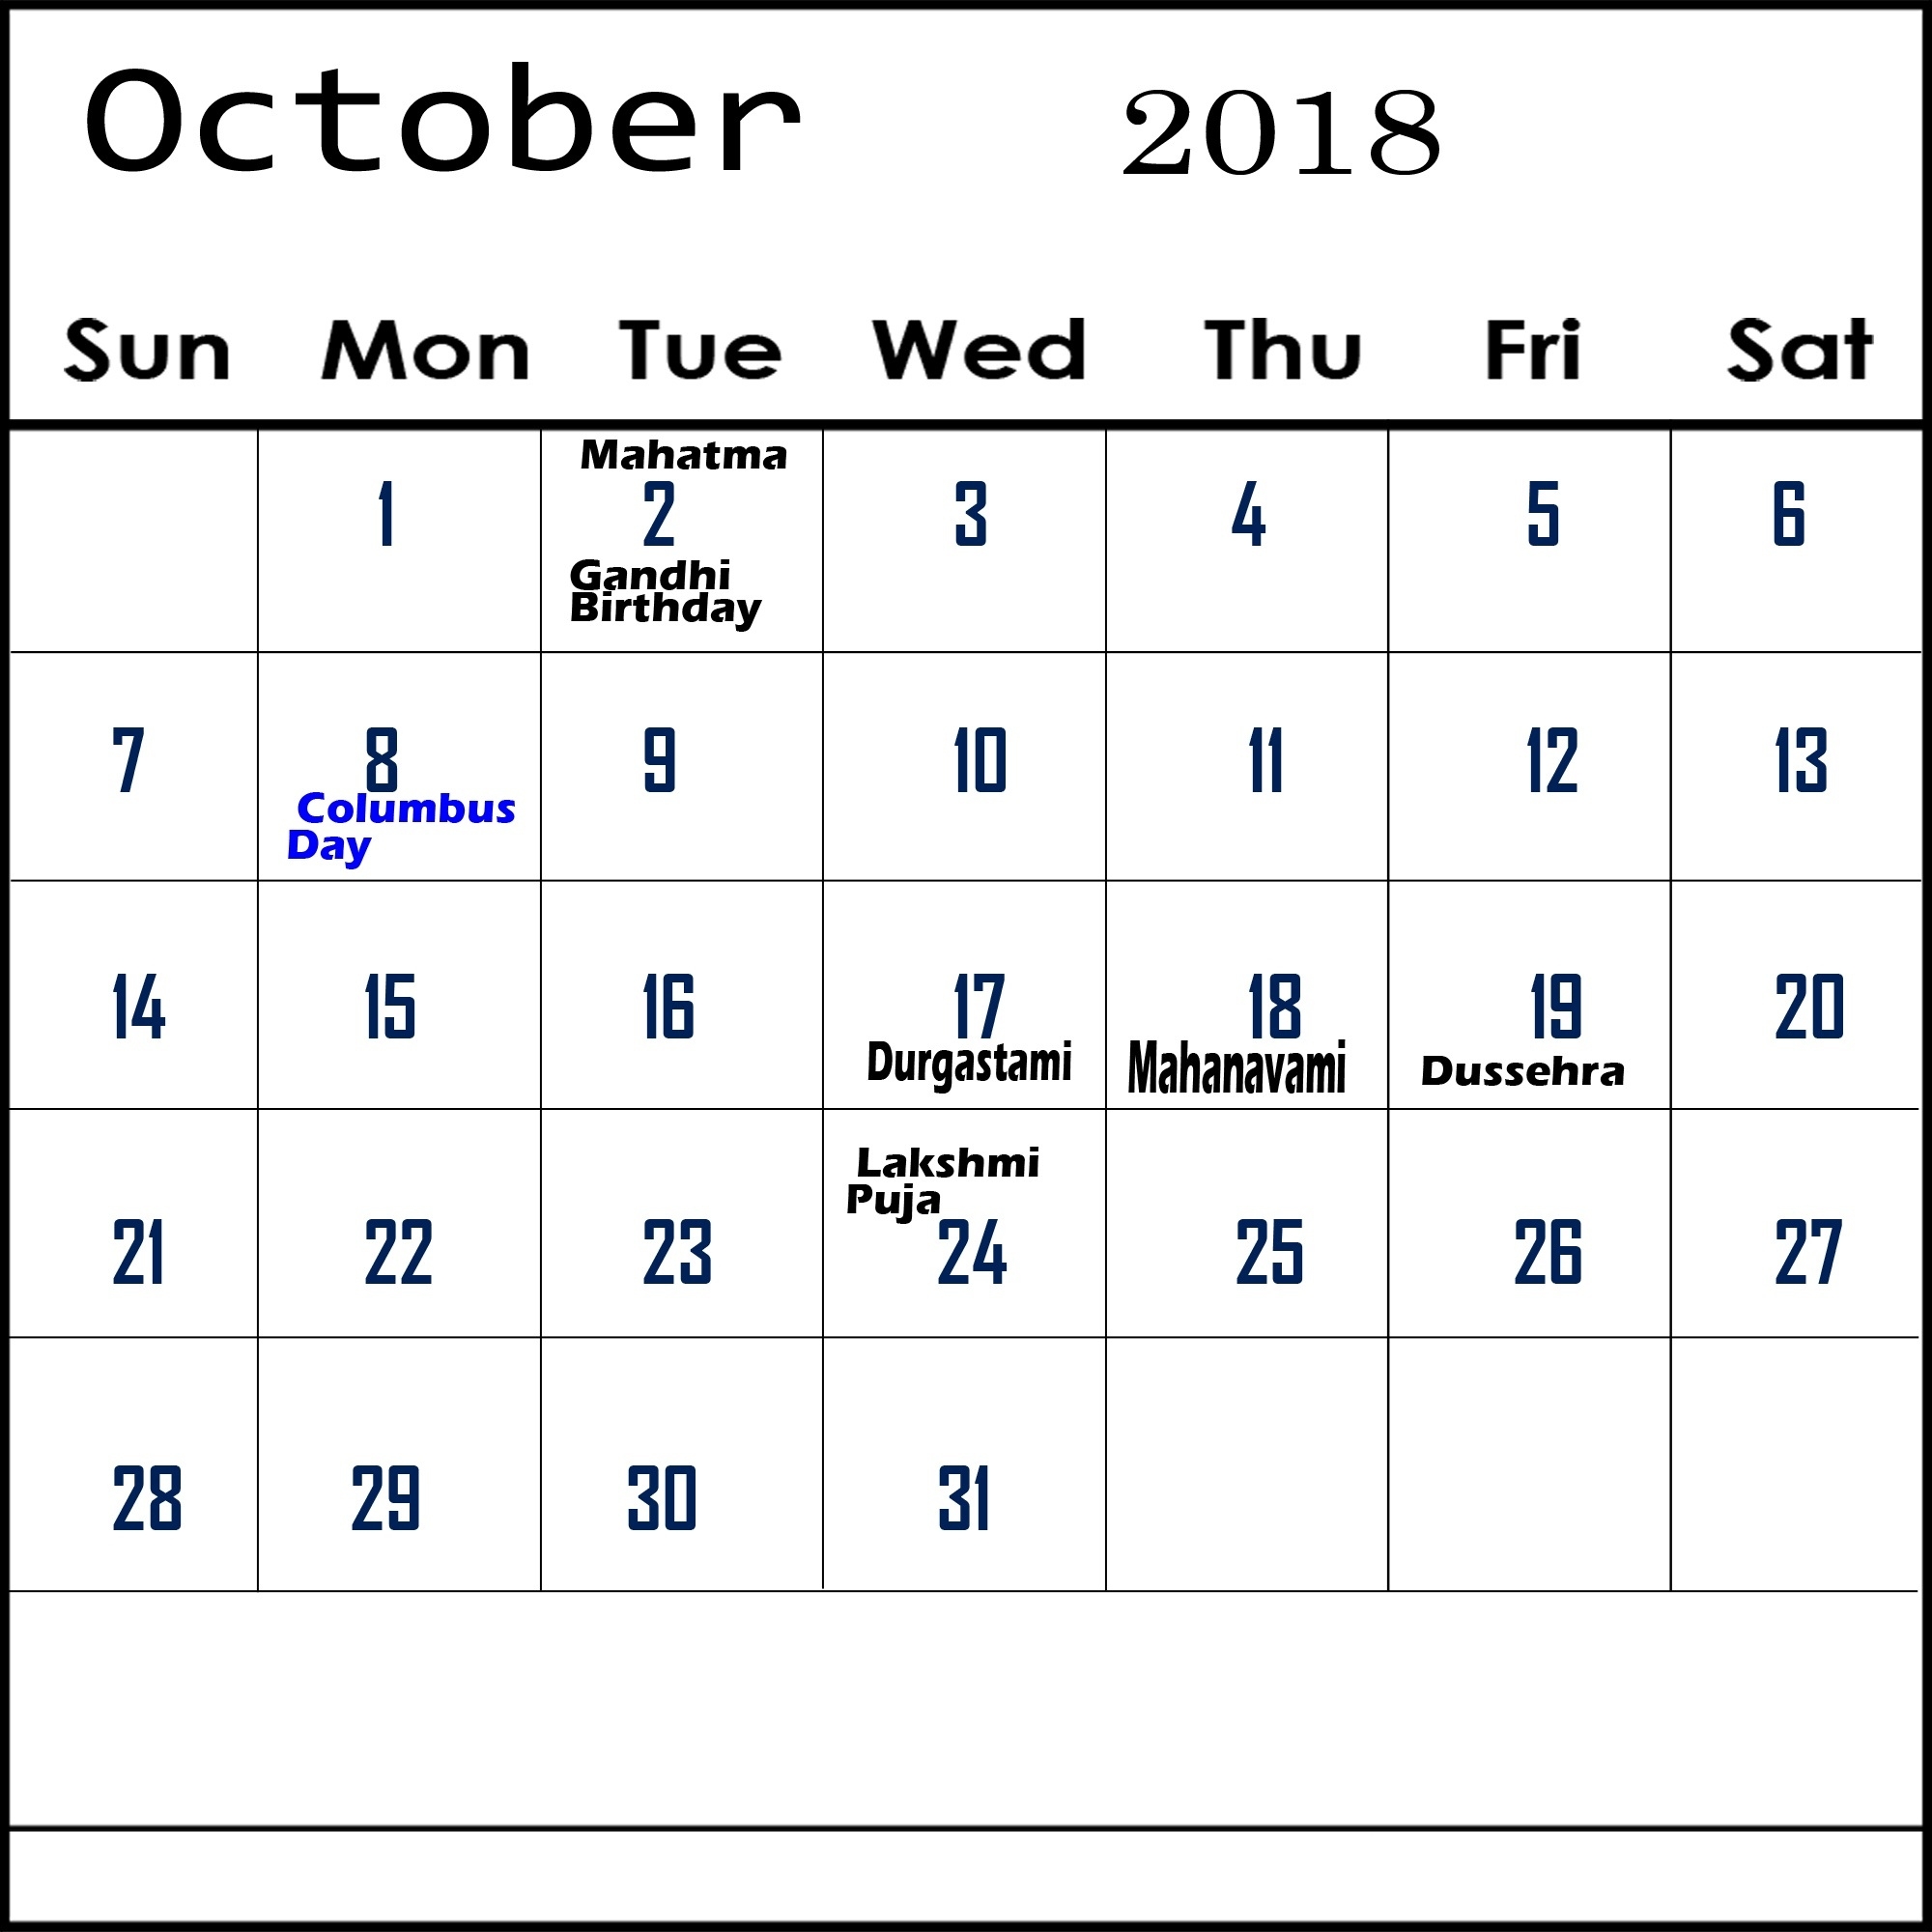 October 2018 Calendar With Holidays For Us, Canada, India, Australia Calendar 1973 Holidays India